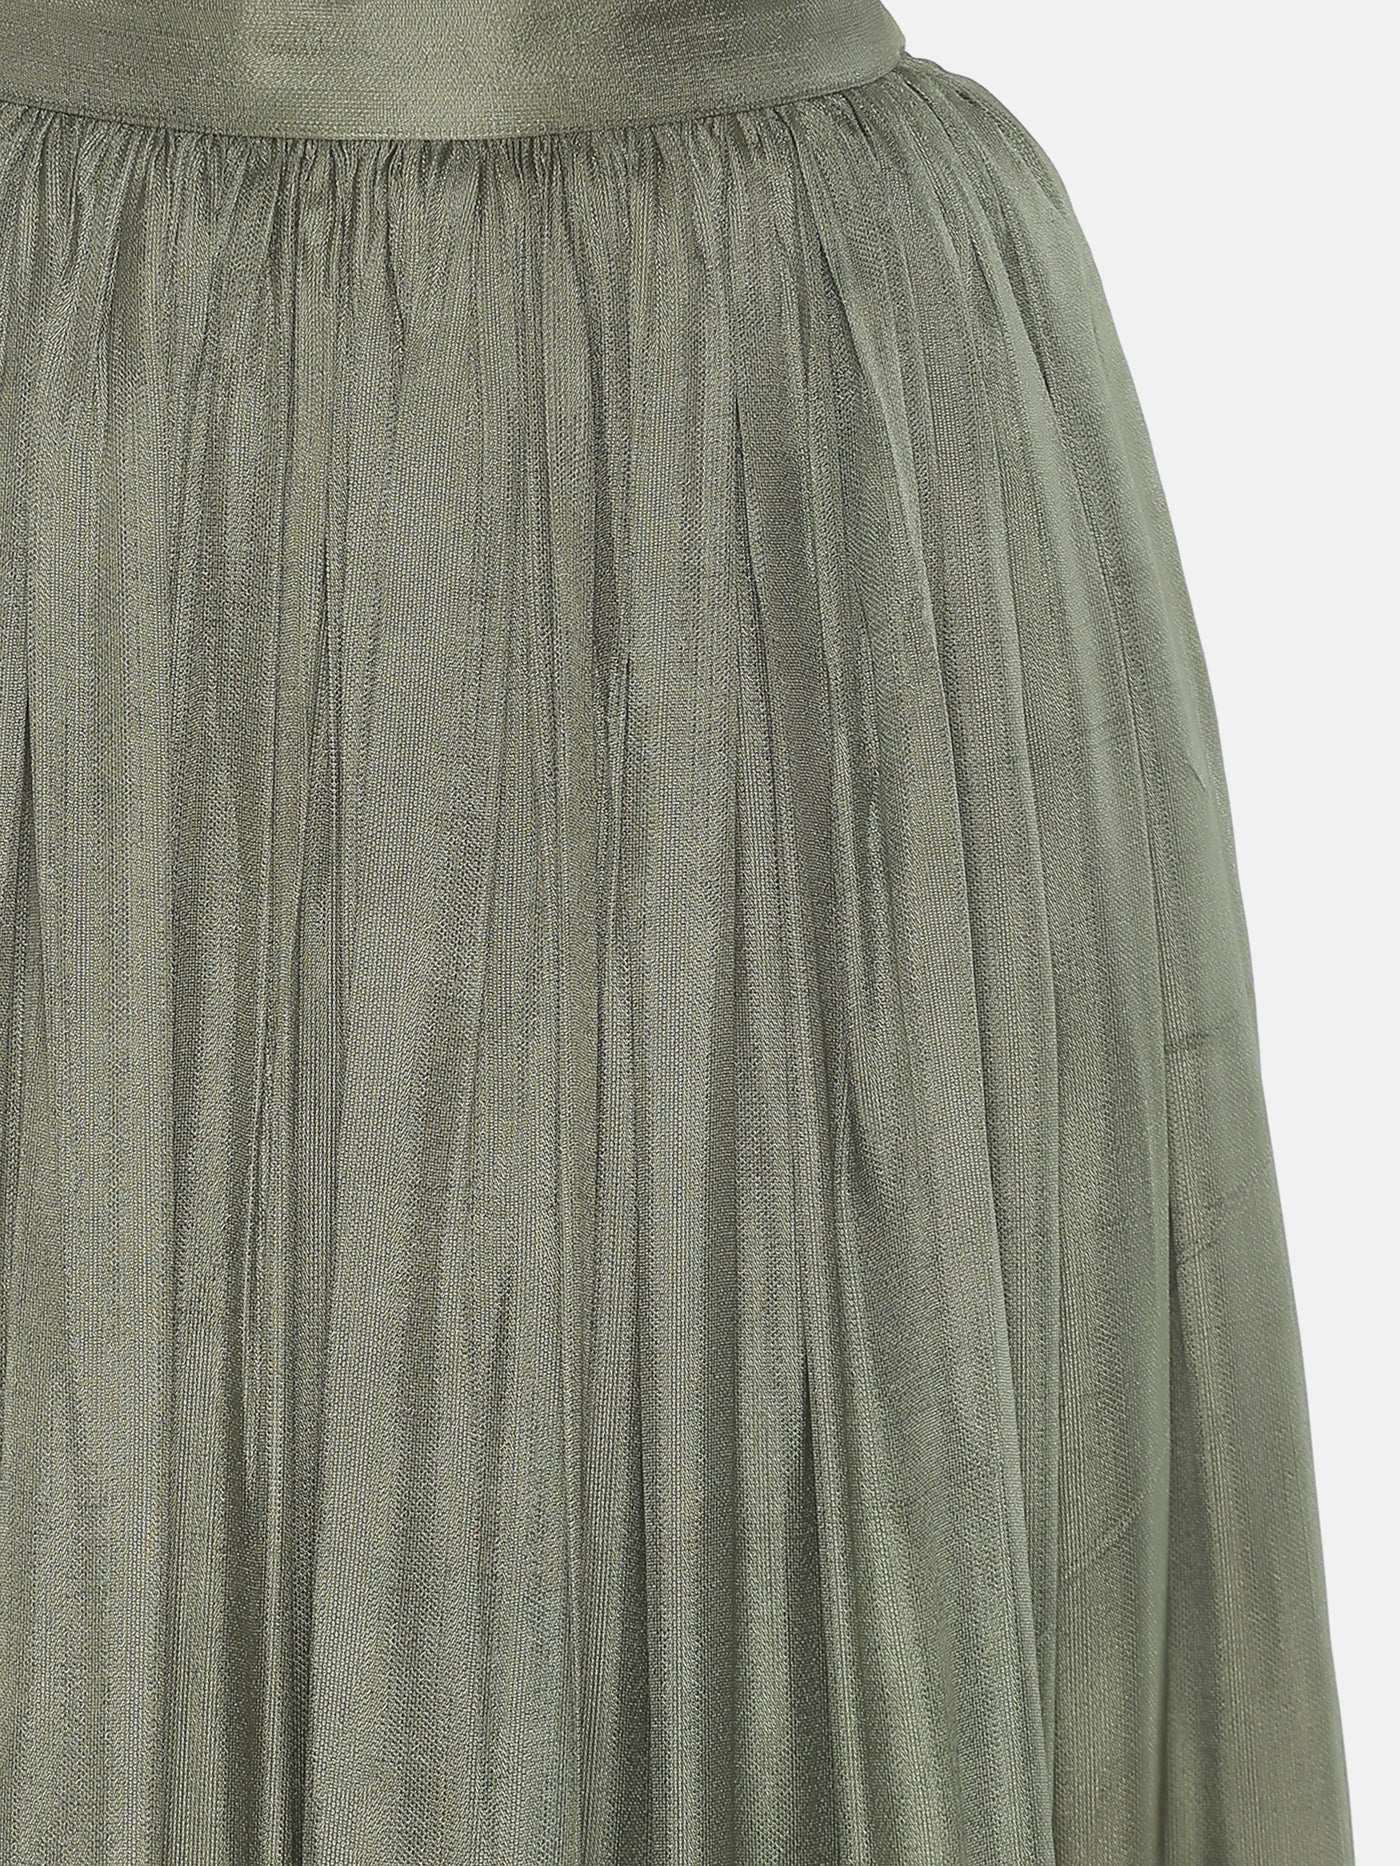 Pastel Green Gathers Skirt - Studio Y